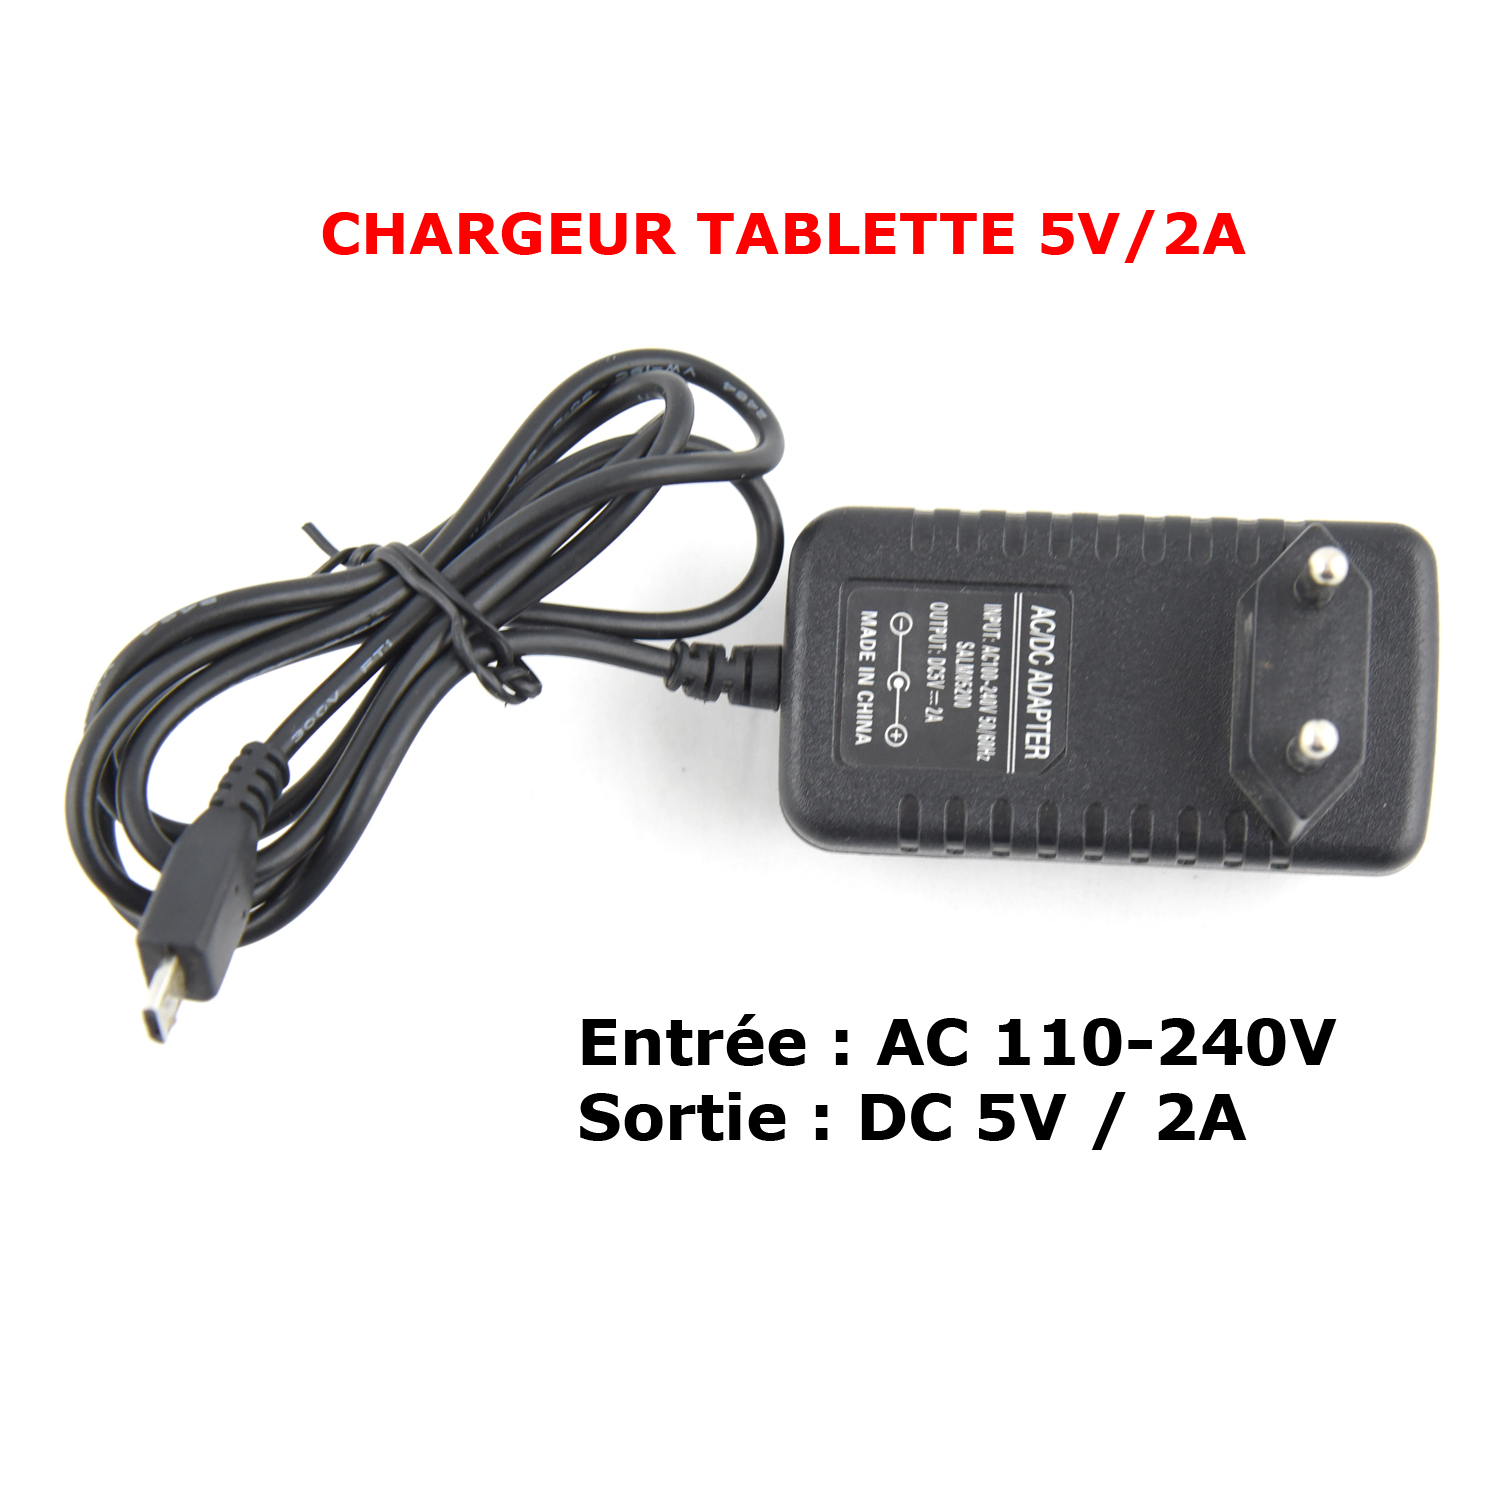 CHARGEUR TABLETTE 5V/2A a bas prix Tunisie